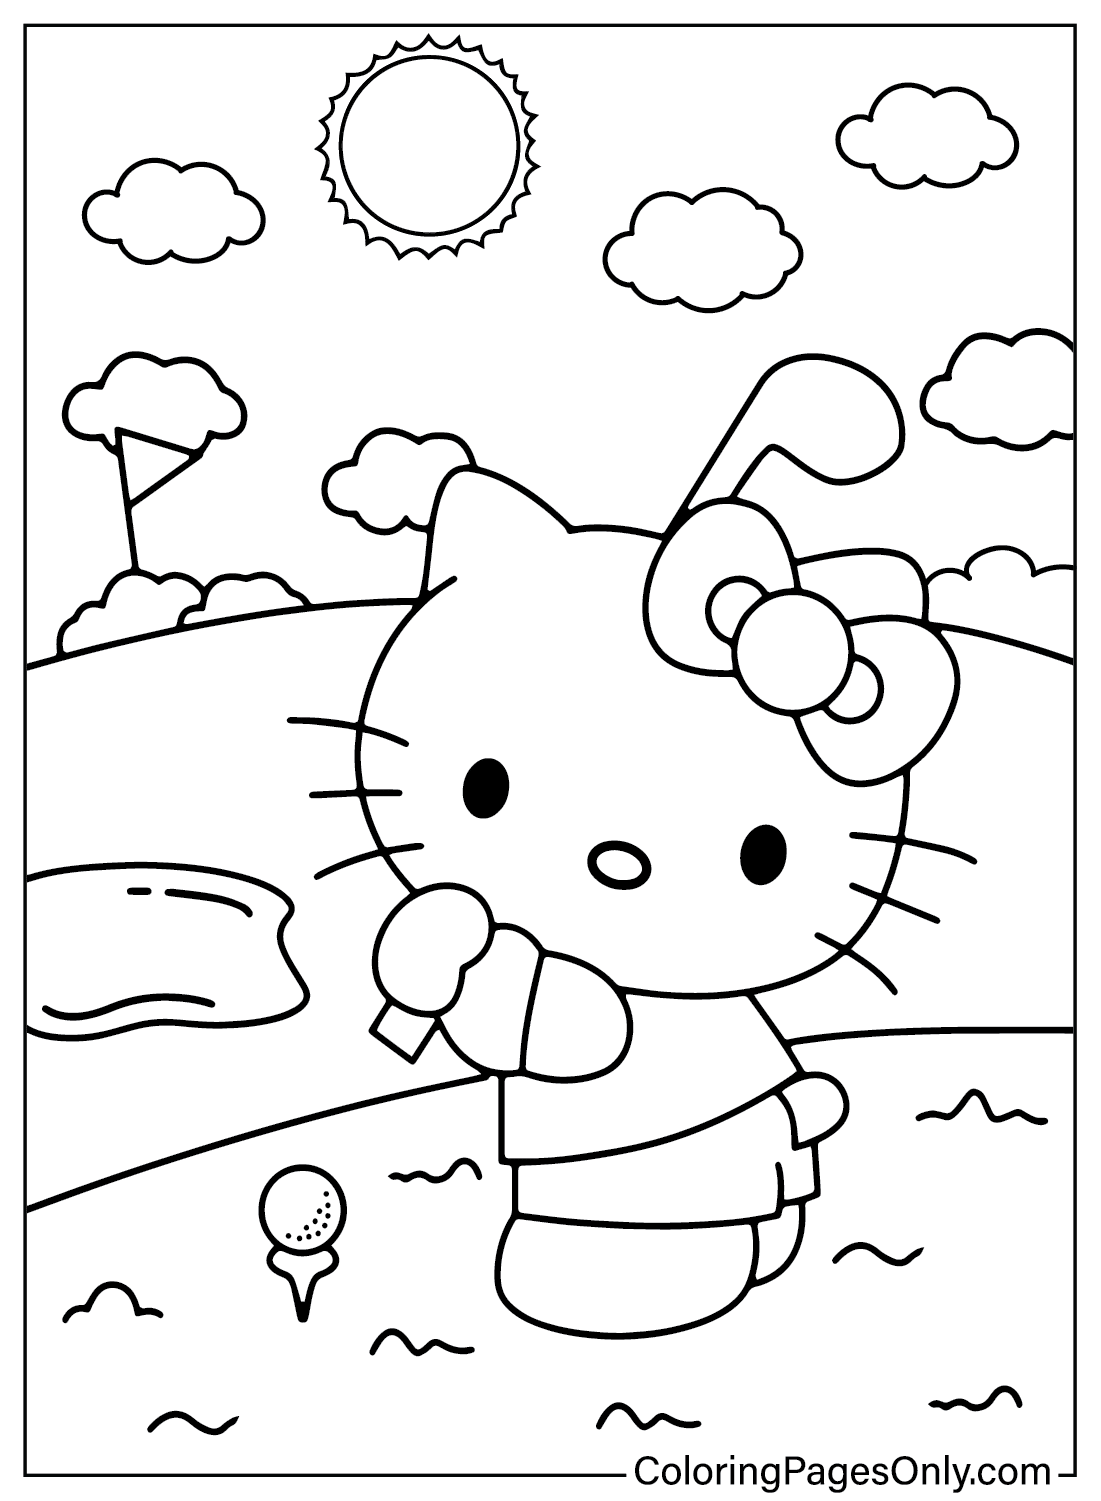 Página para colorir da Hello Kitty para imprimir